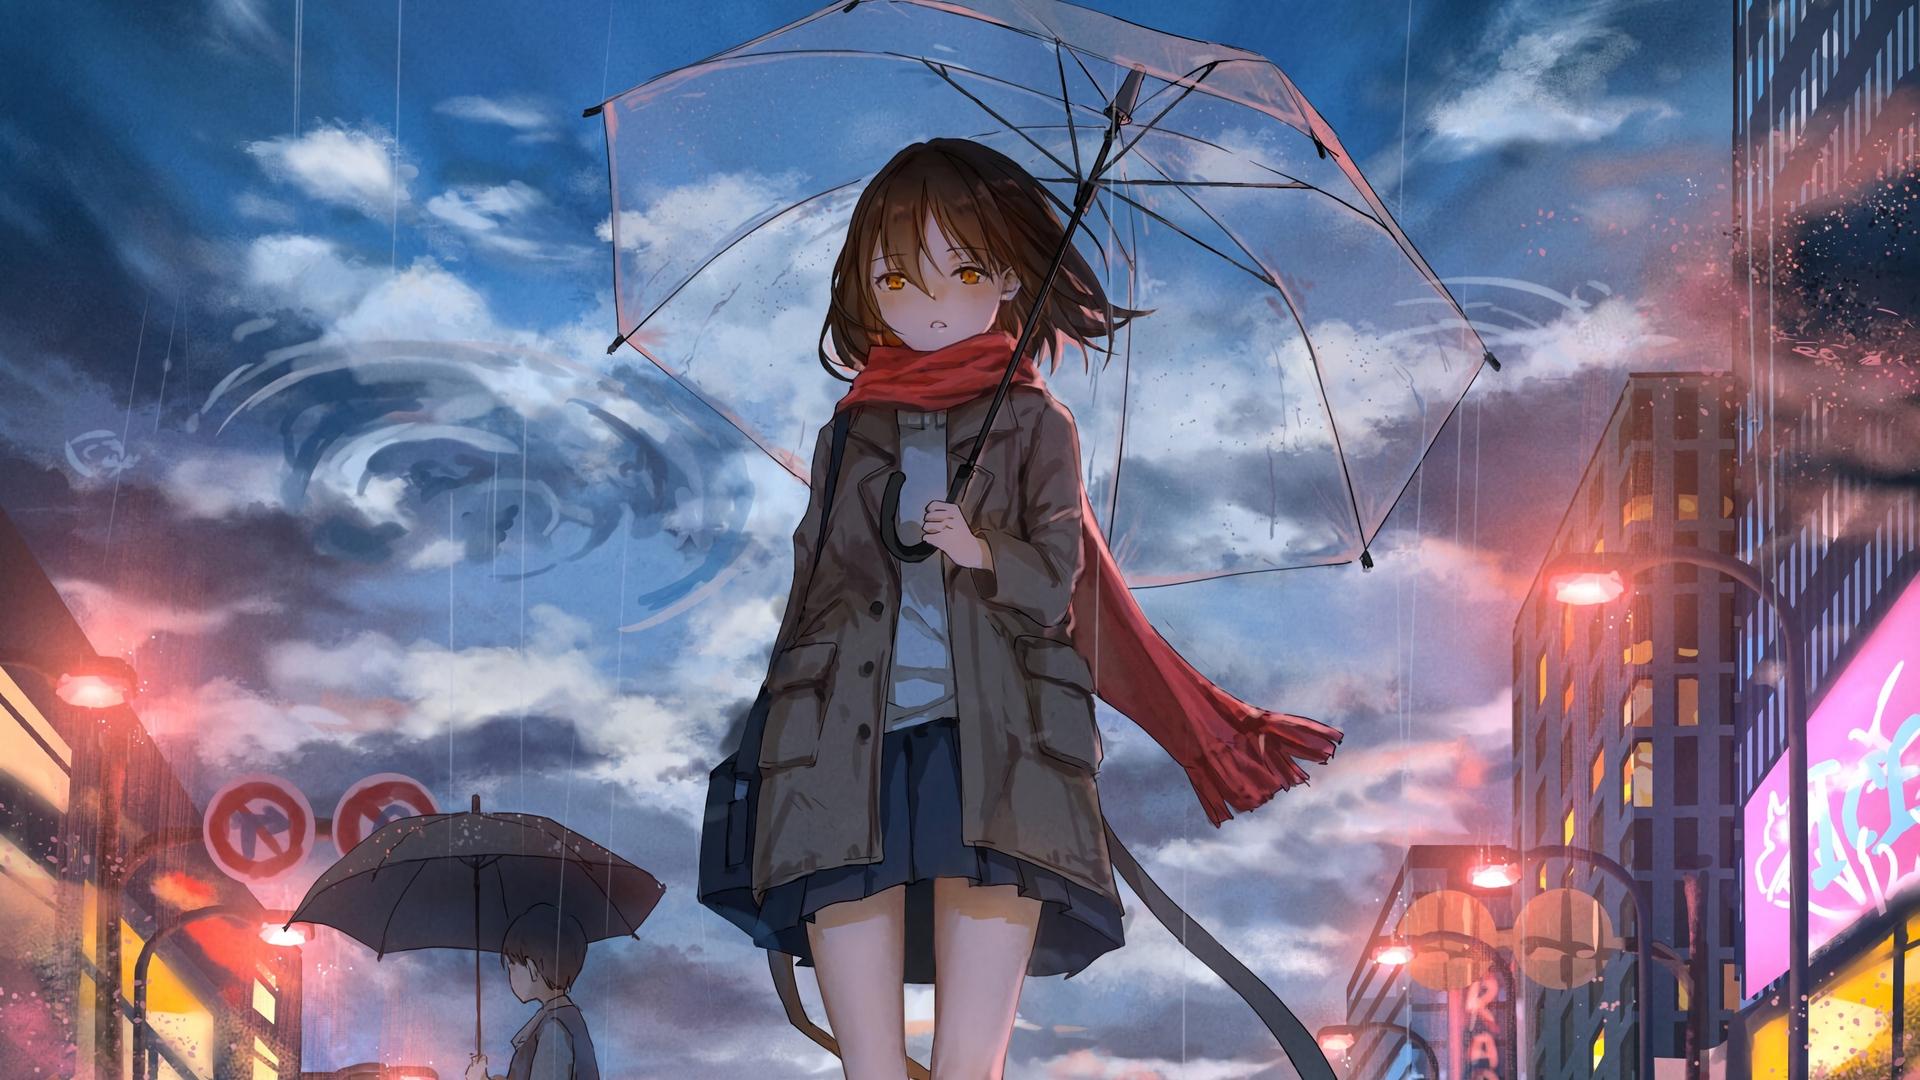 Download wallpaper 1920x1080 girl, umbrella, anime, rain